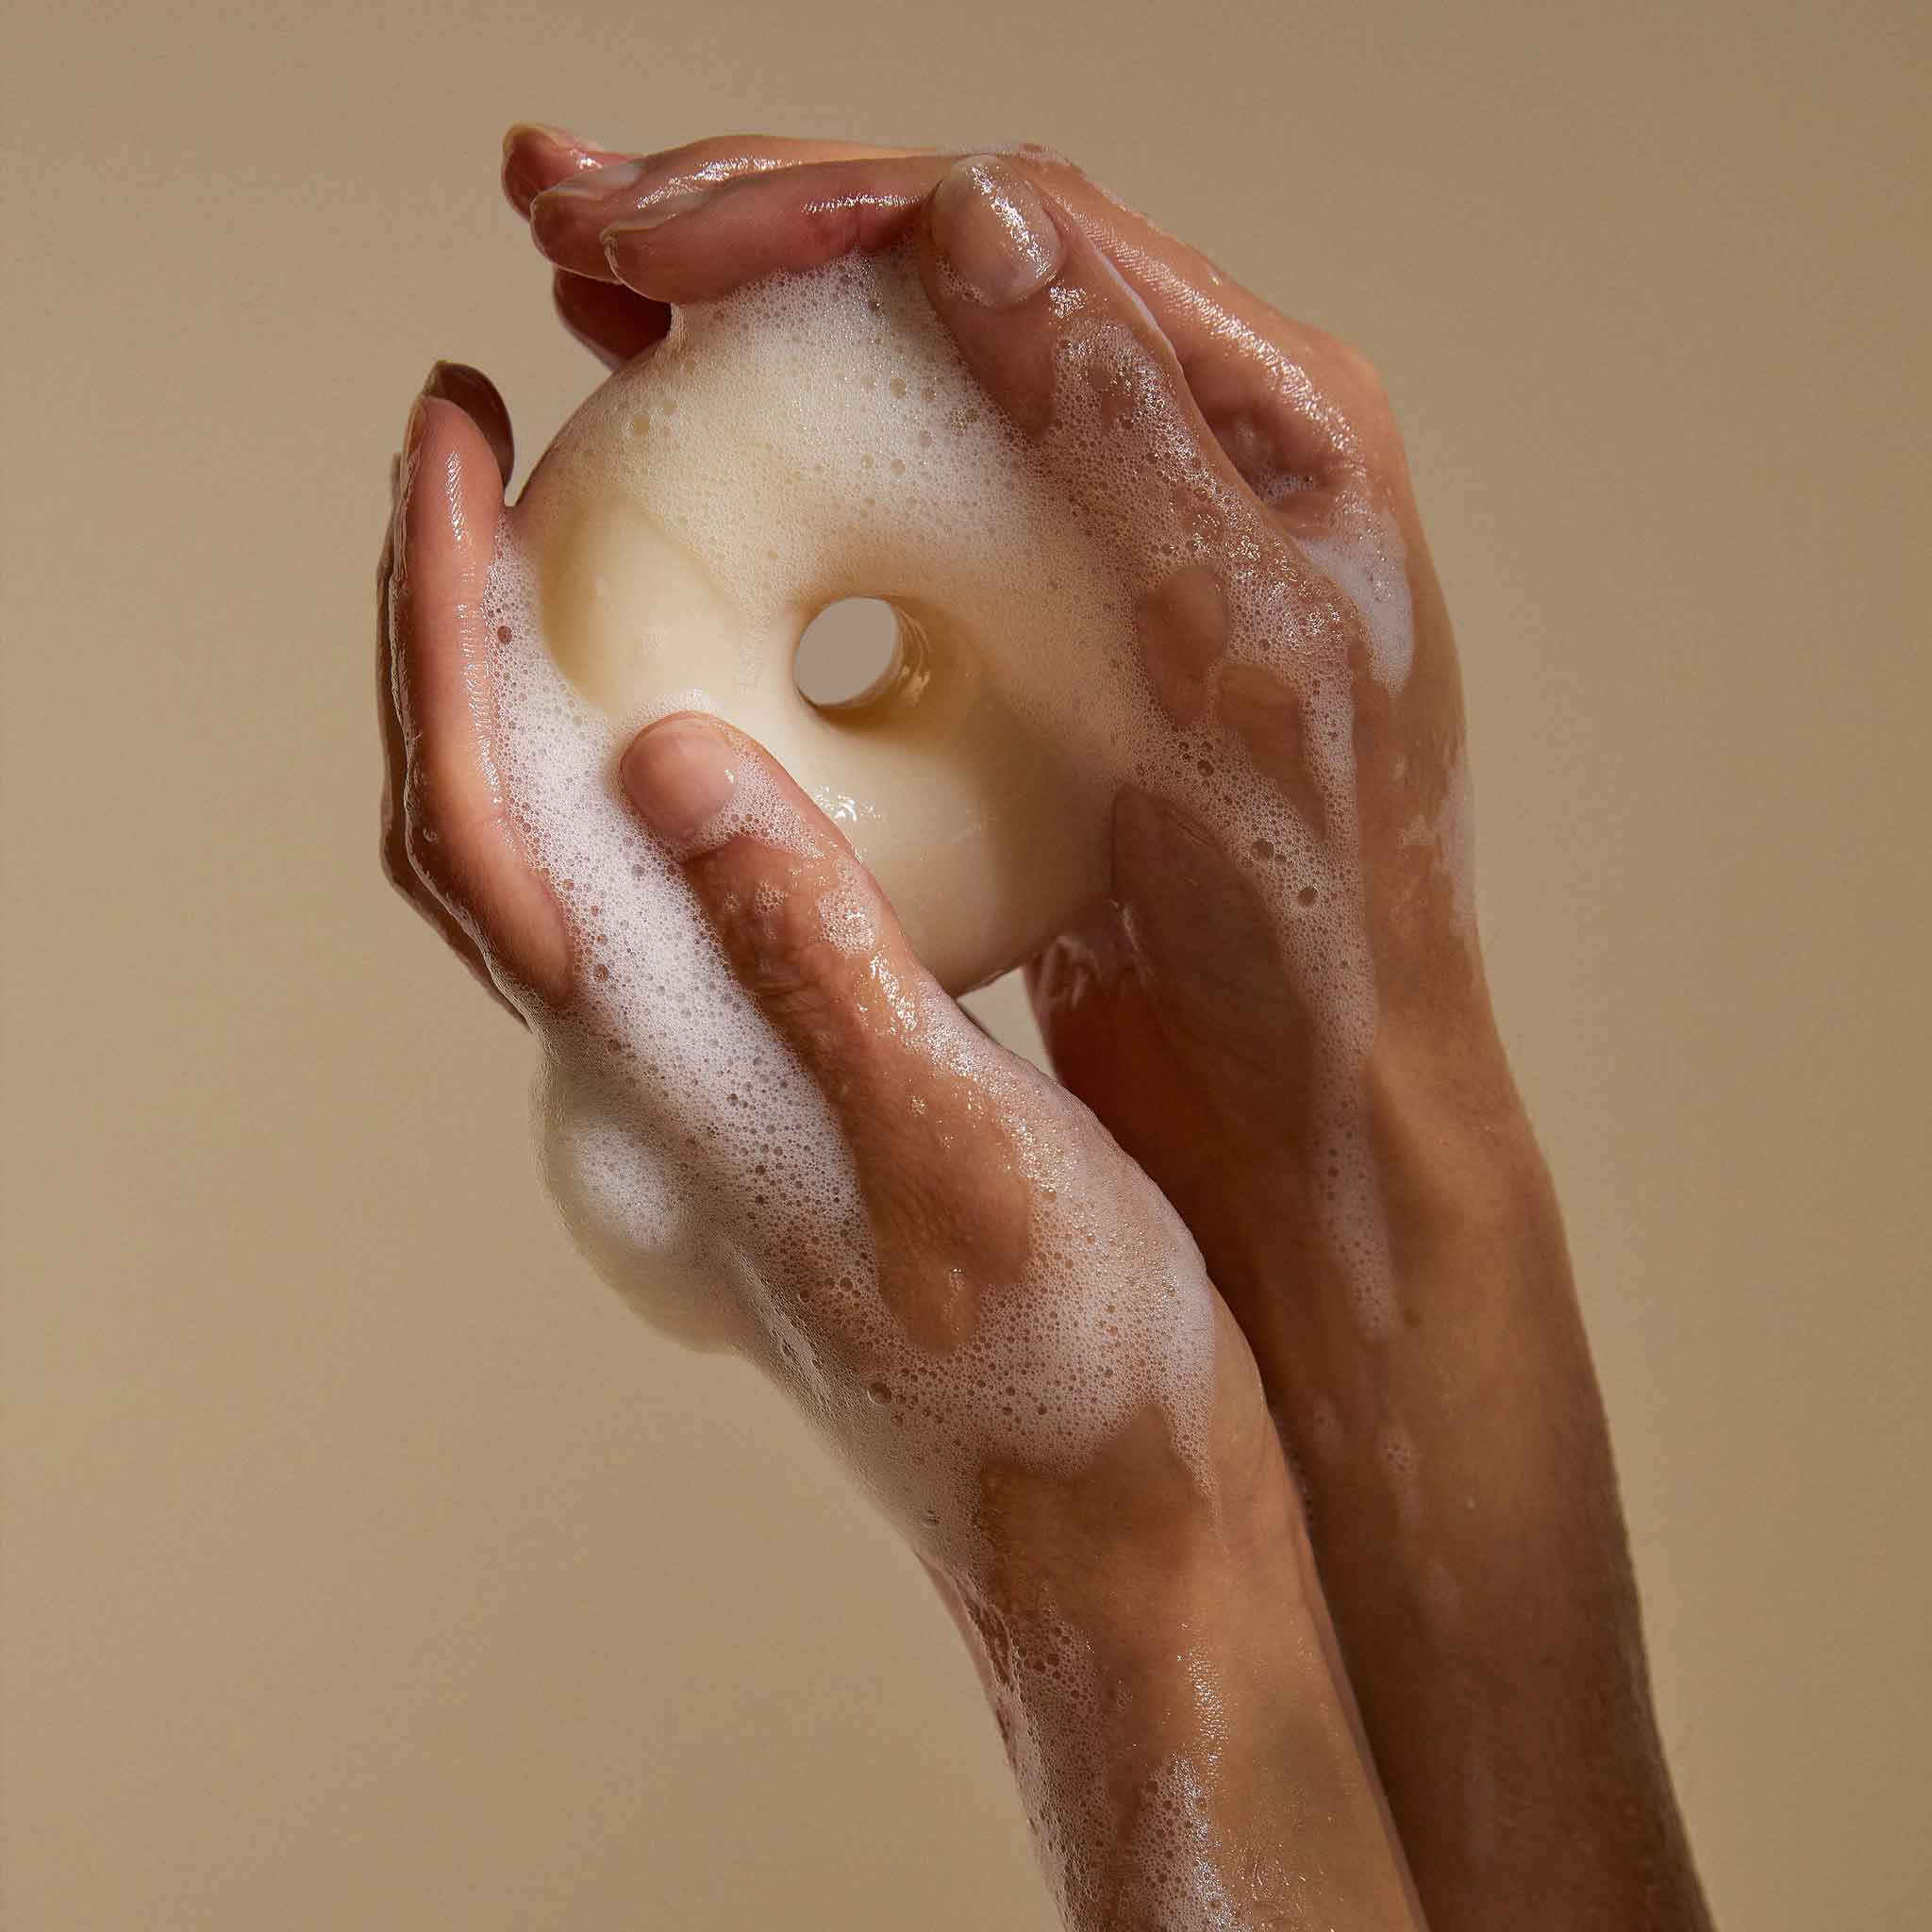 kinfill-hand-soap-donut-shape.jpg